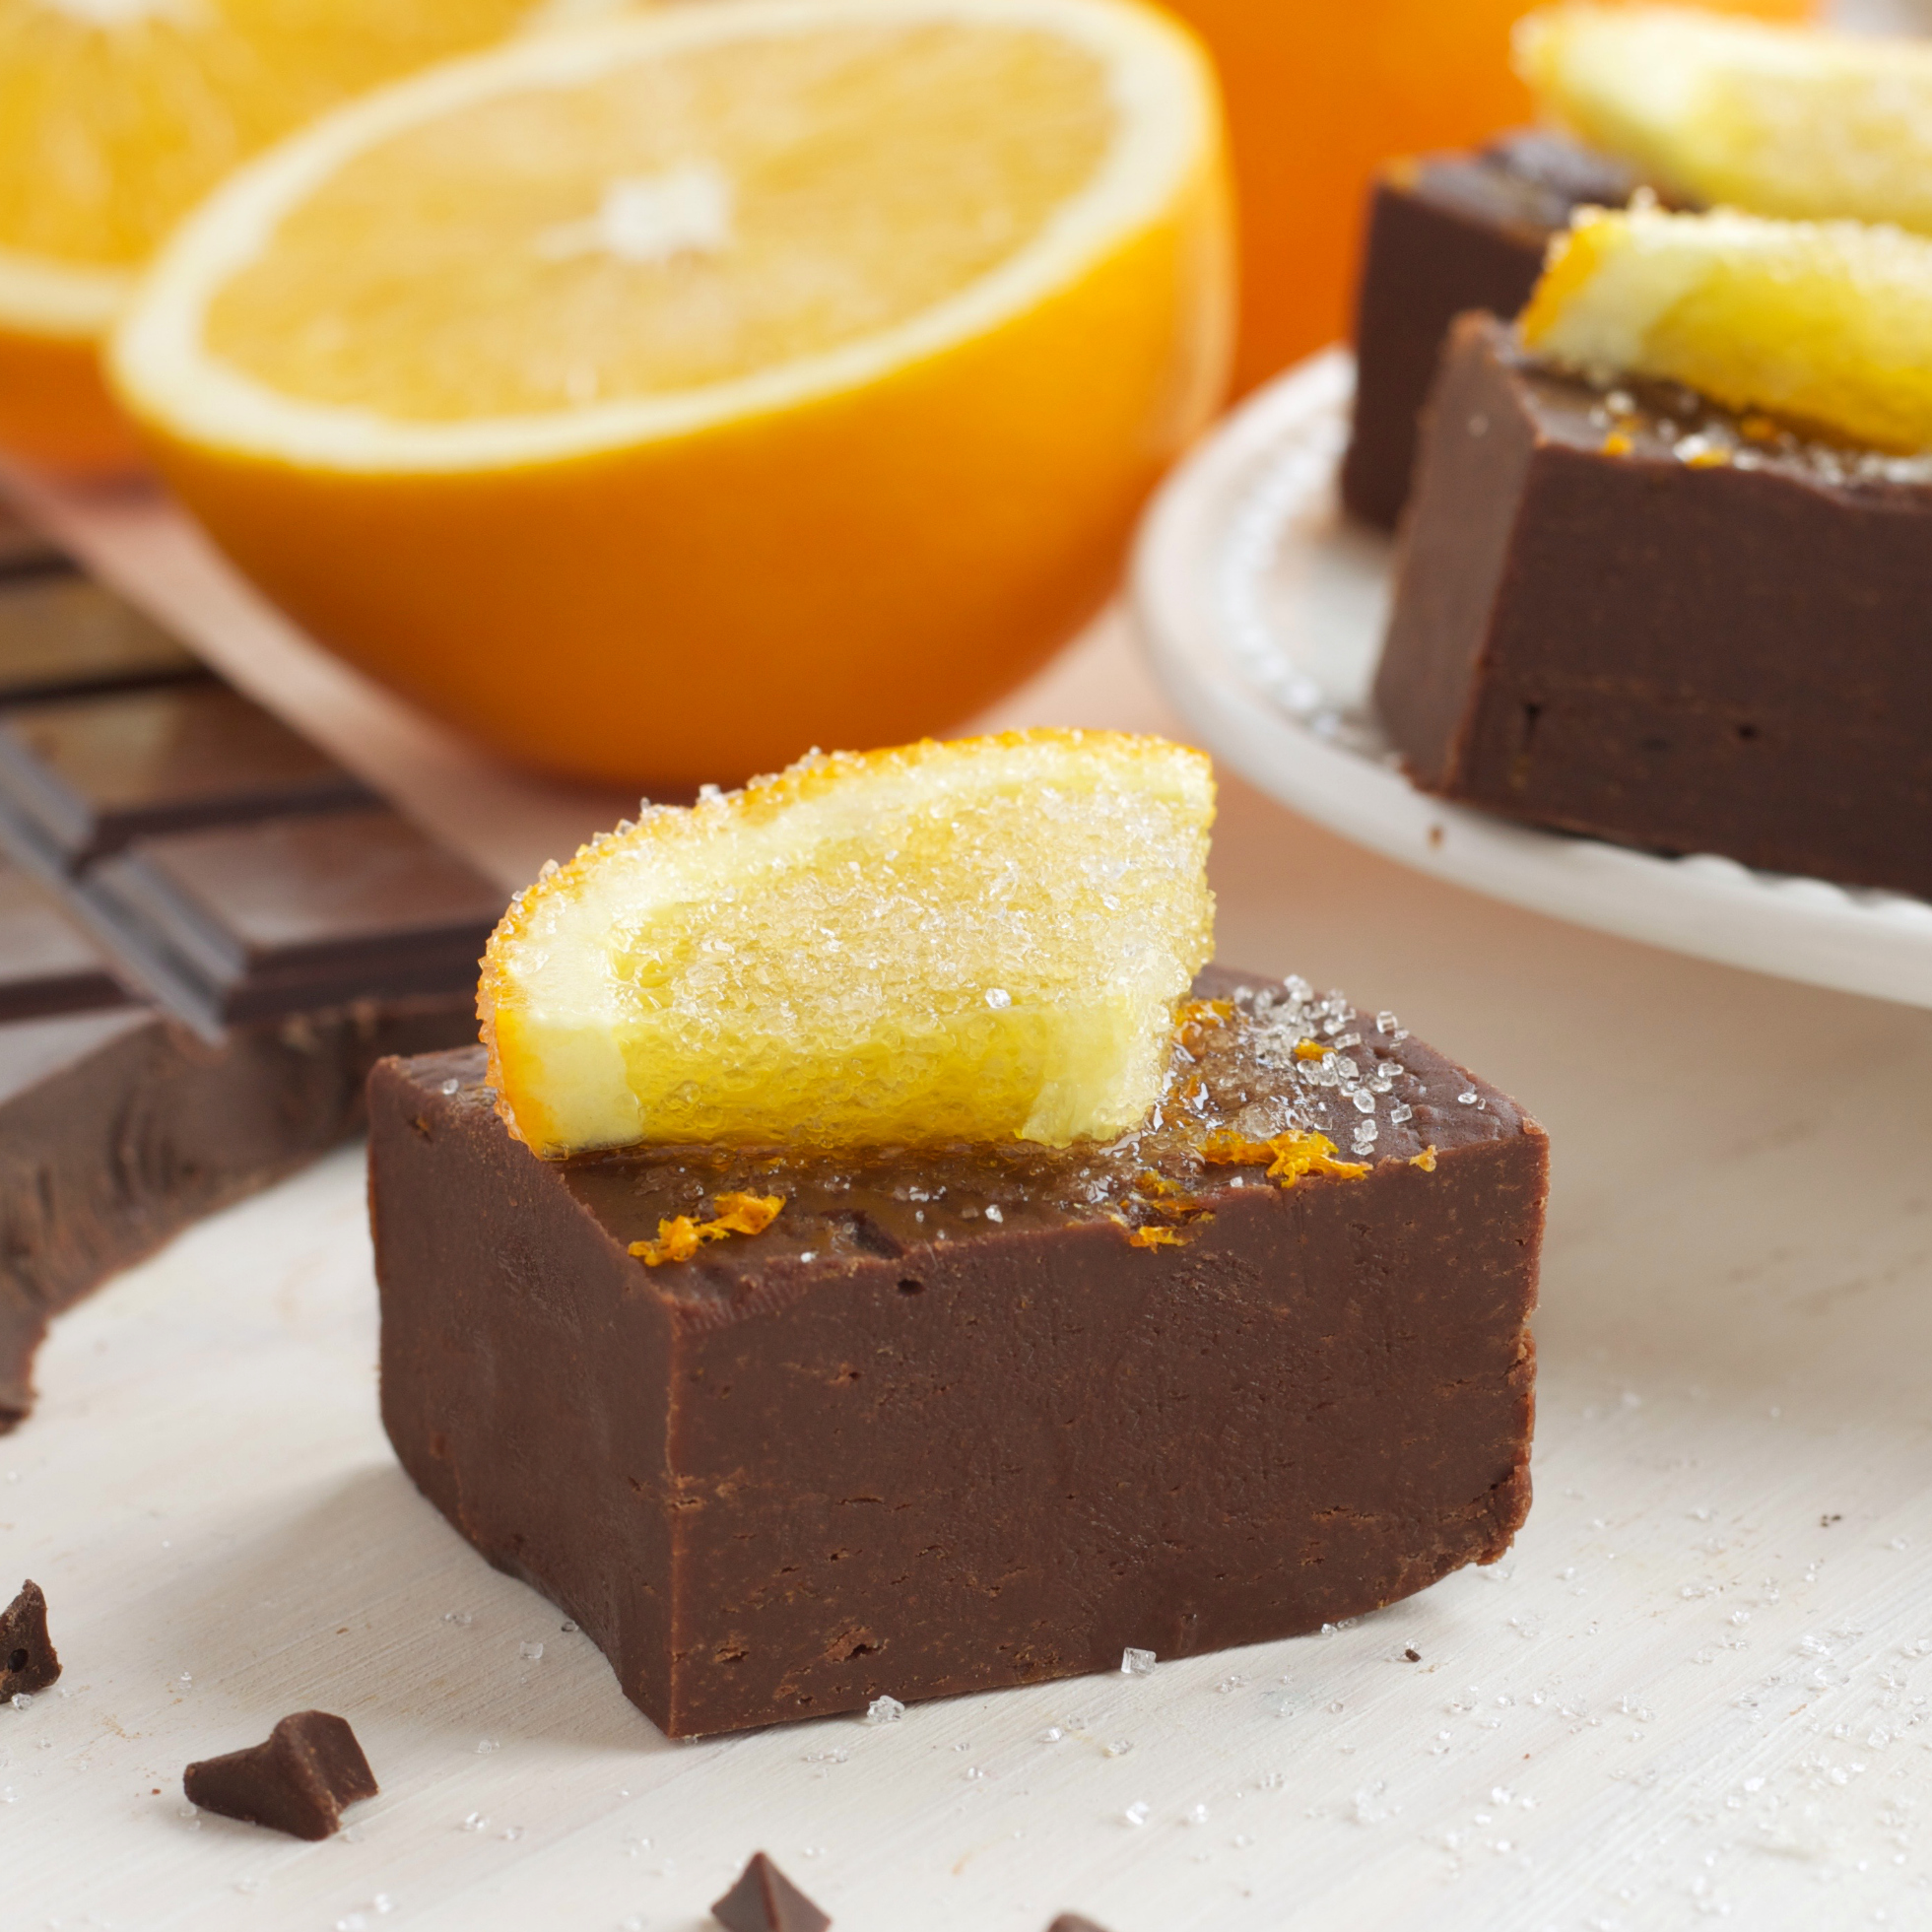 Easy 3-Ingredient Chocolate Orange Fudge - The Busy Baker